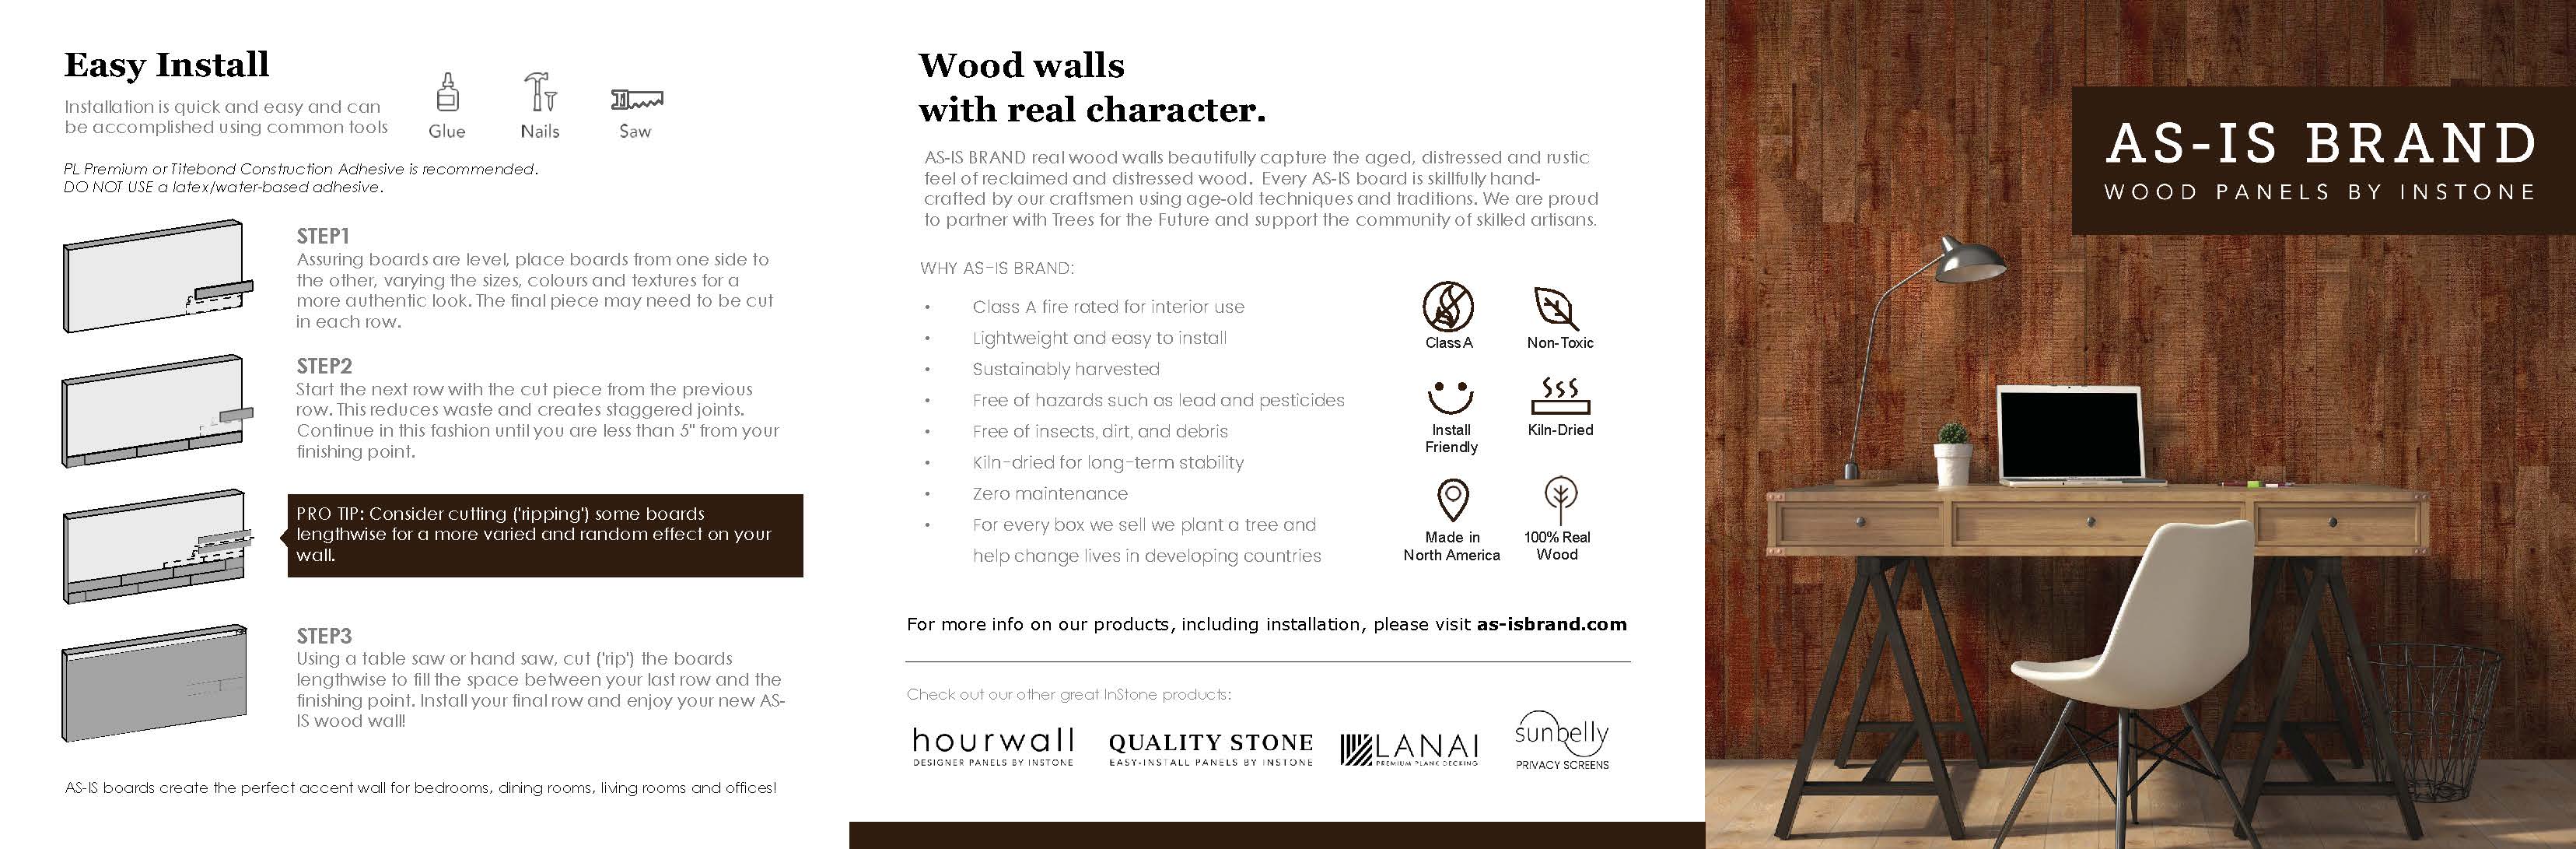 ASIS Brand Wood Panels